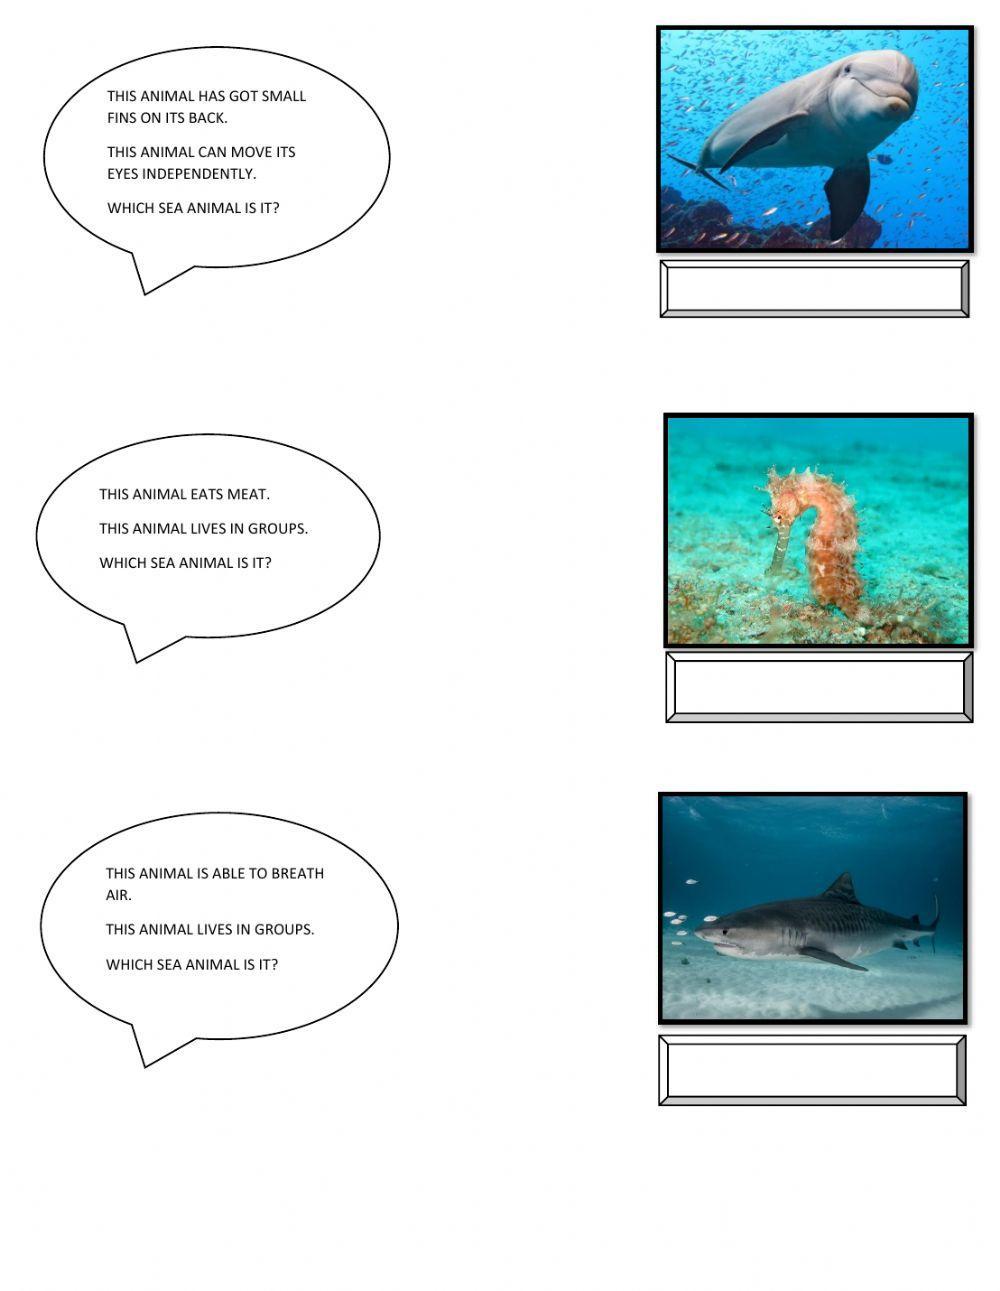 Sea animals riddles